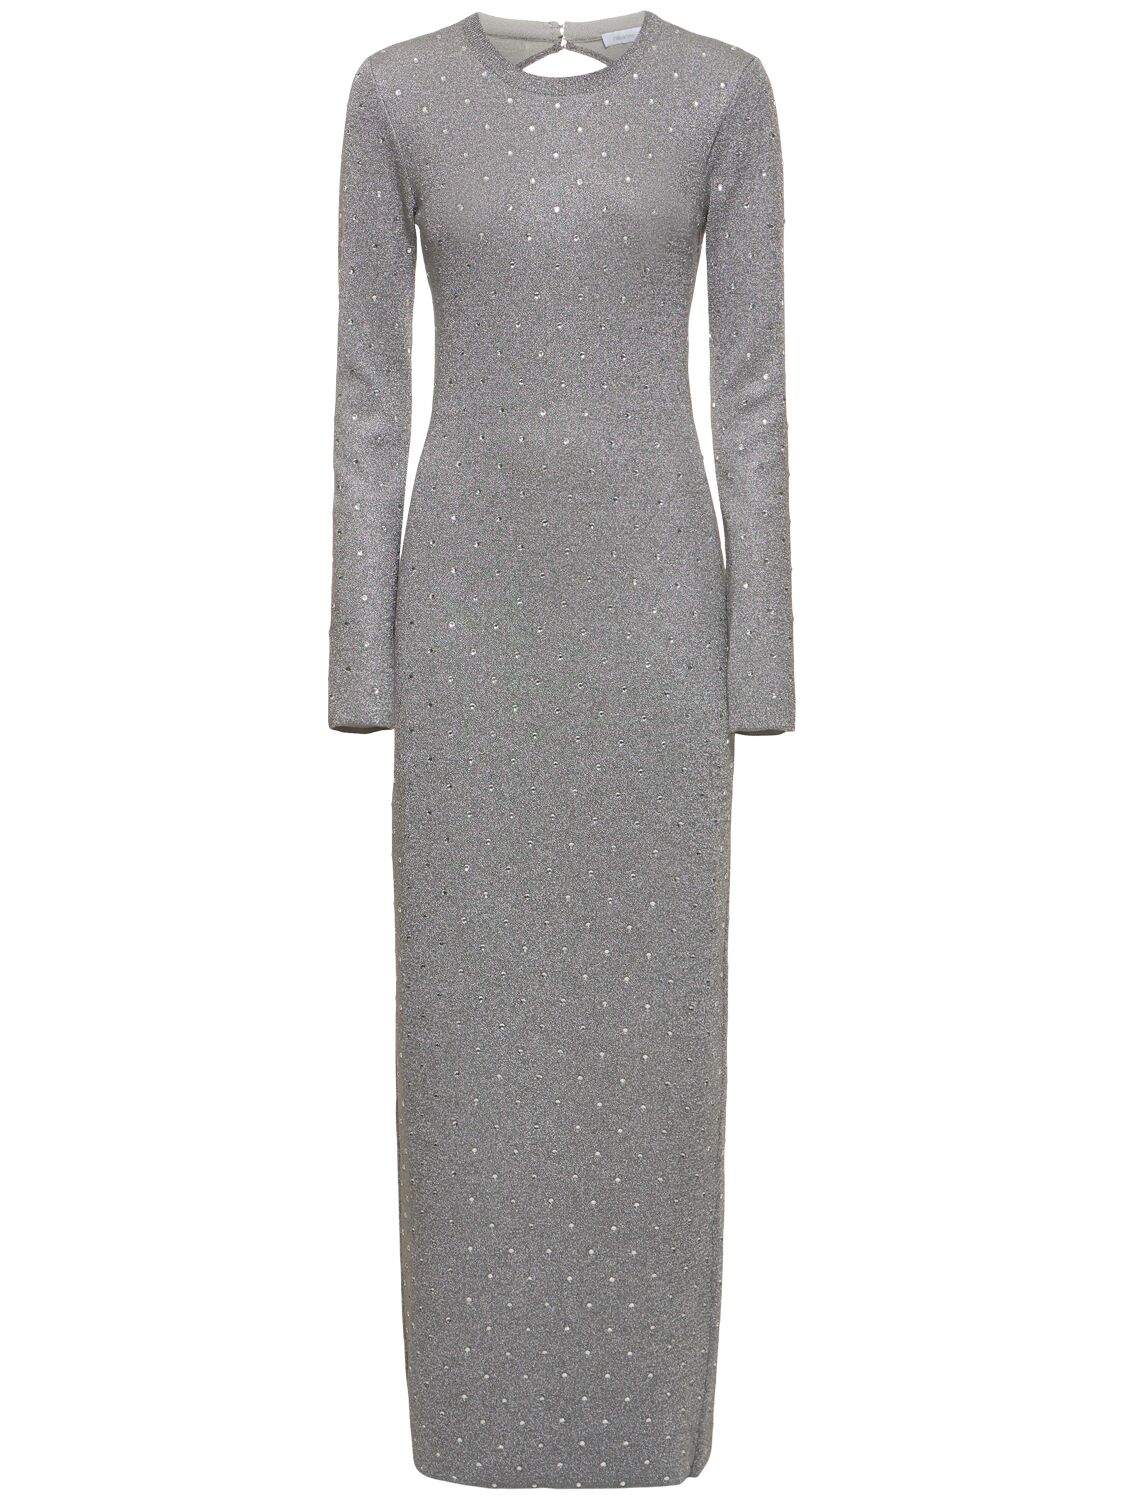 Rabanne Embellished Lurex Knit Open Back Dress In Silver